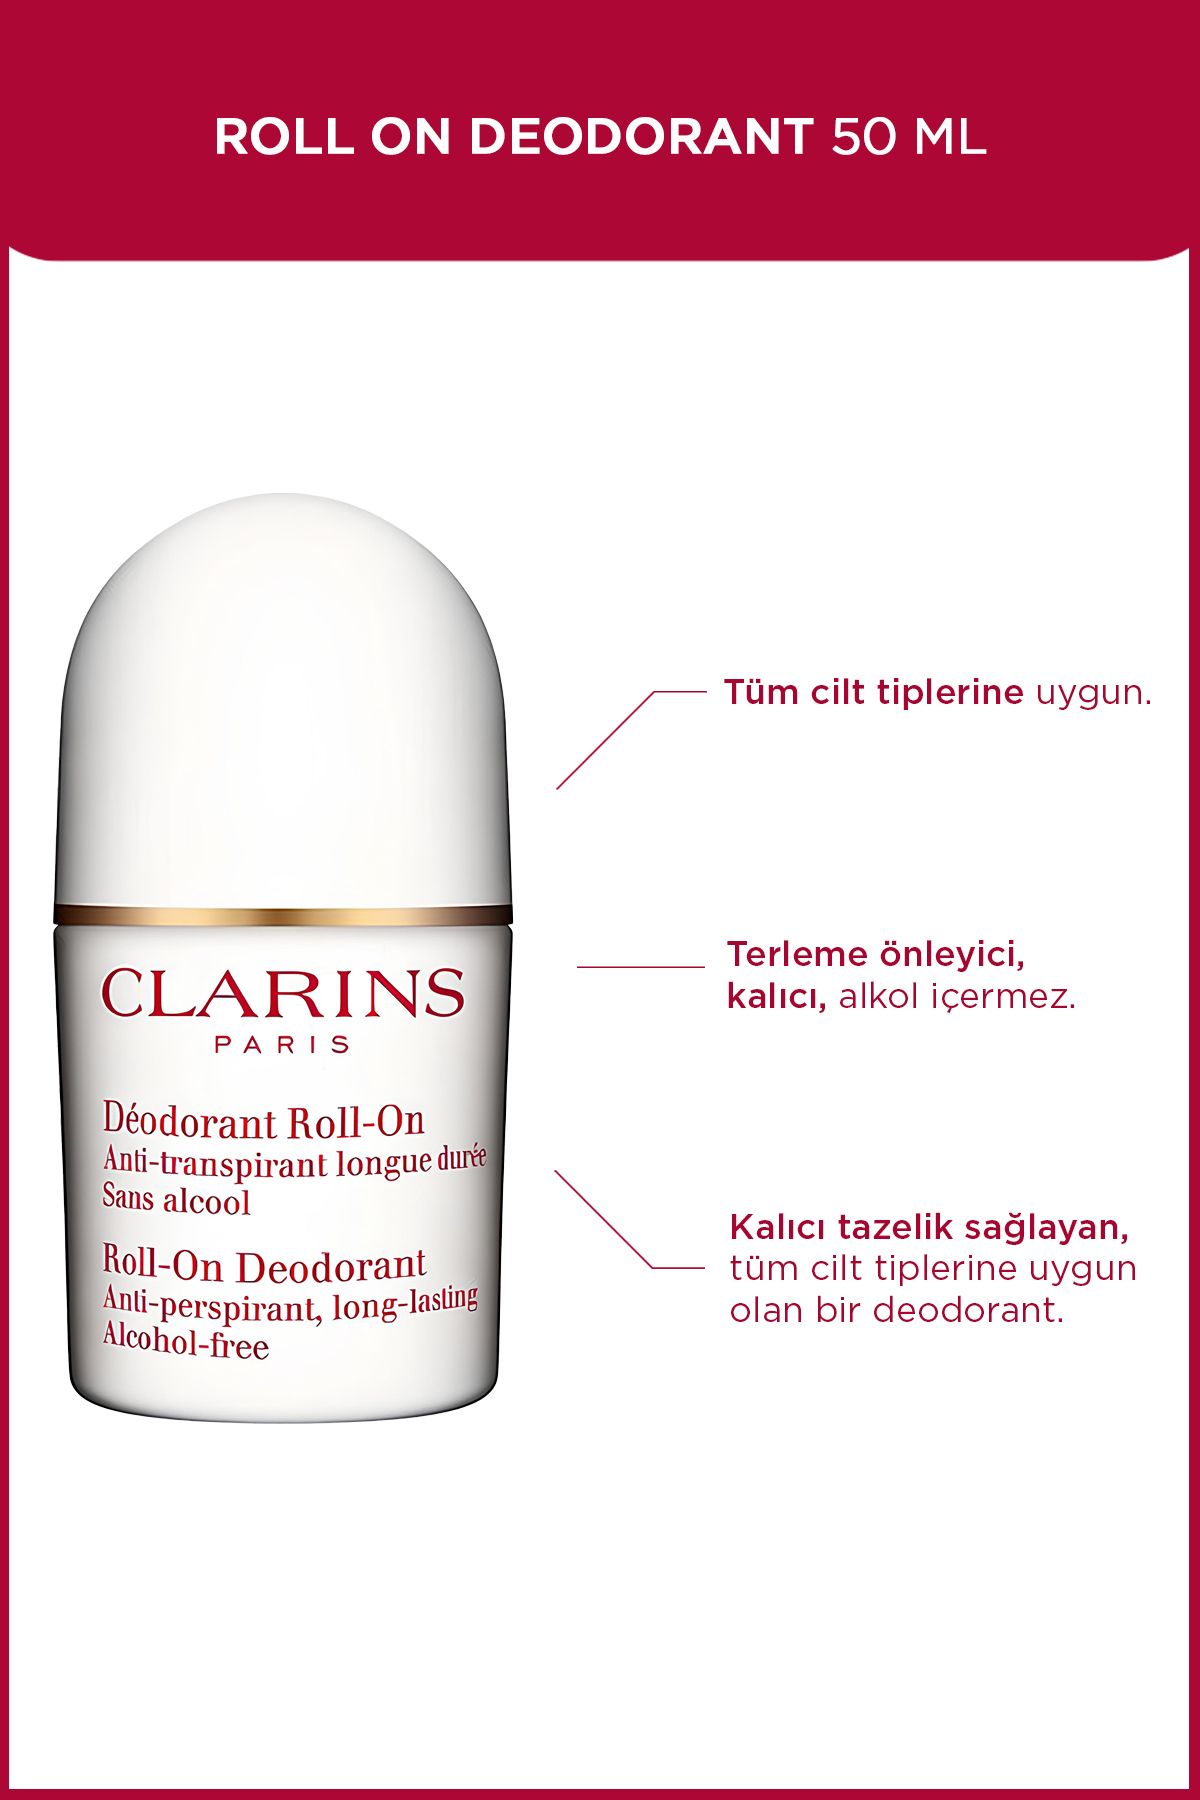 Clarins 50 Ml Vücut Deodorant